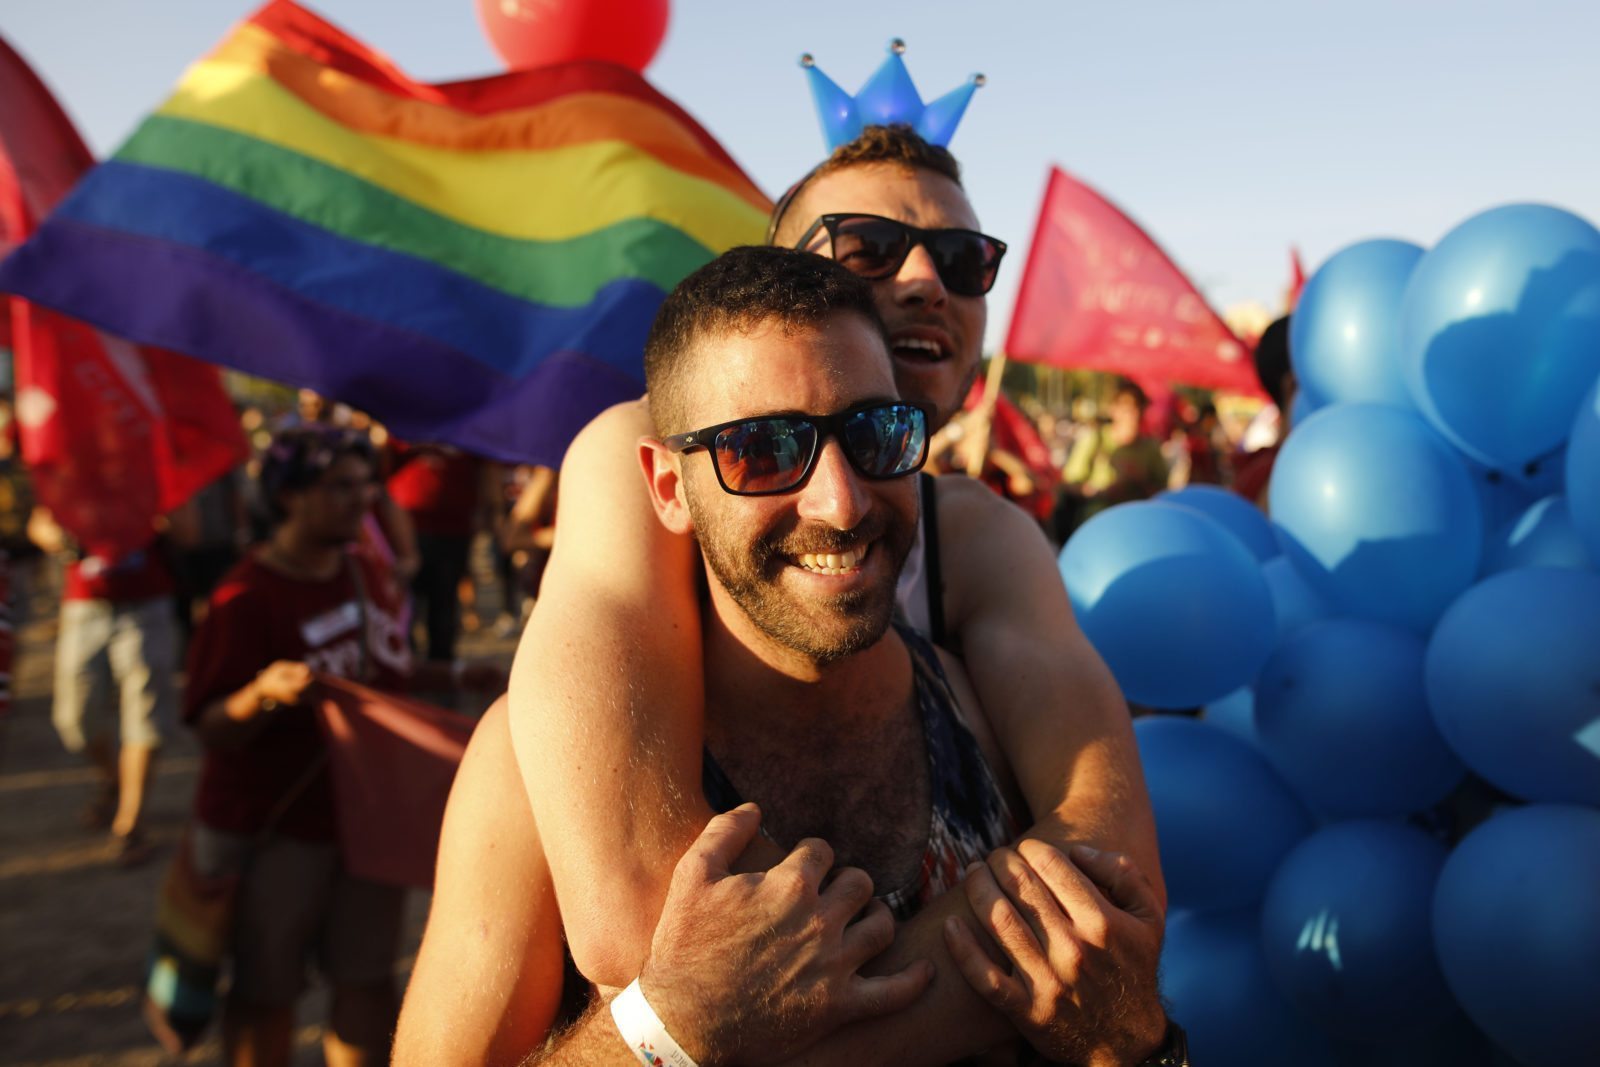 GAY SHUKAANSI SITES IN CALGARY